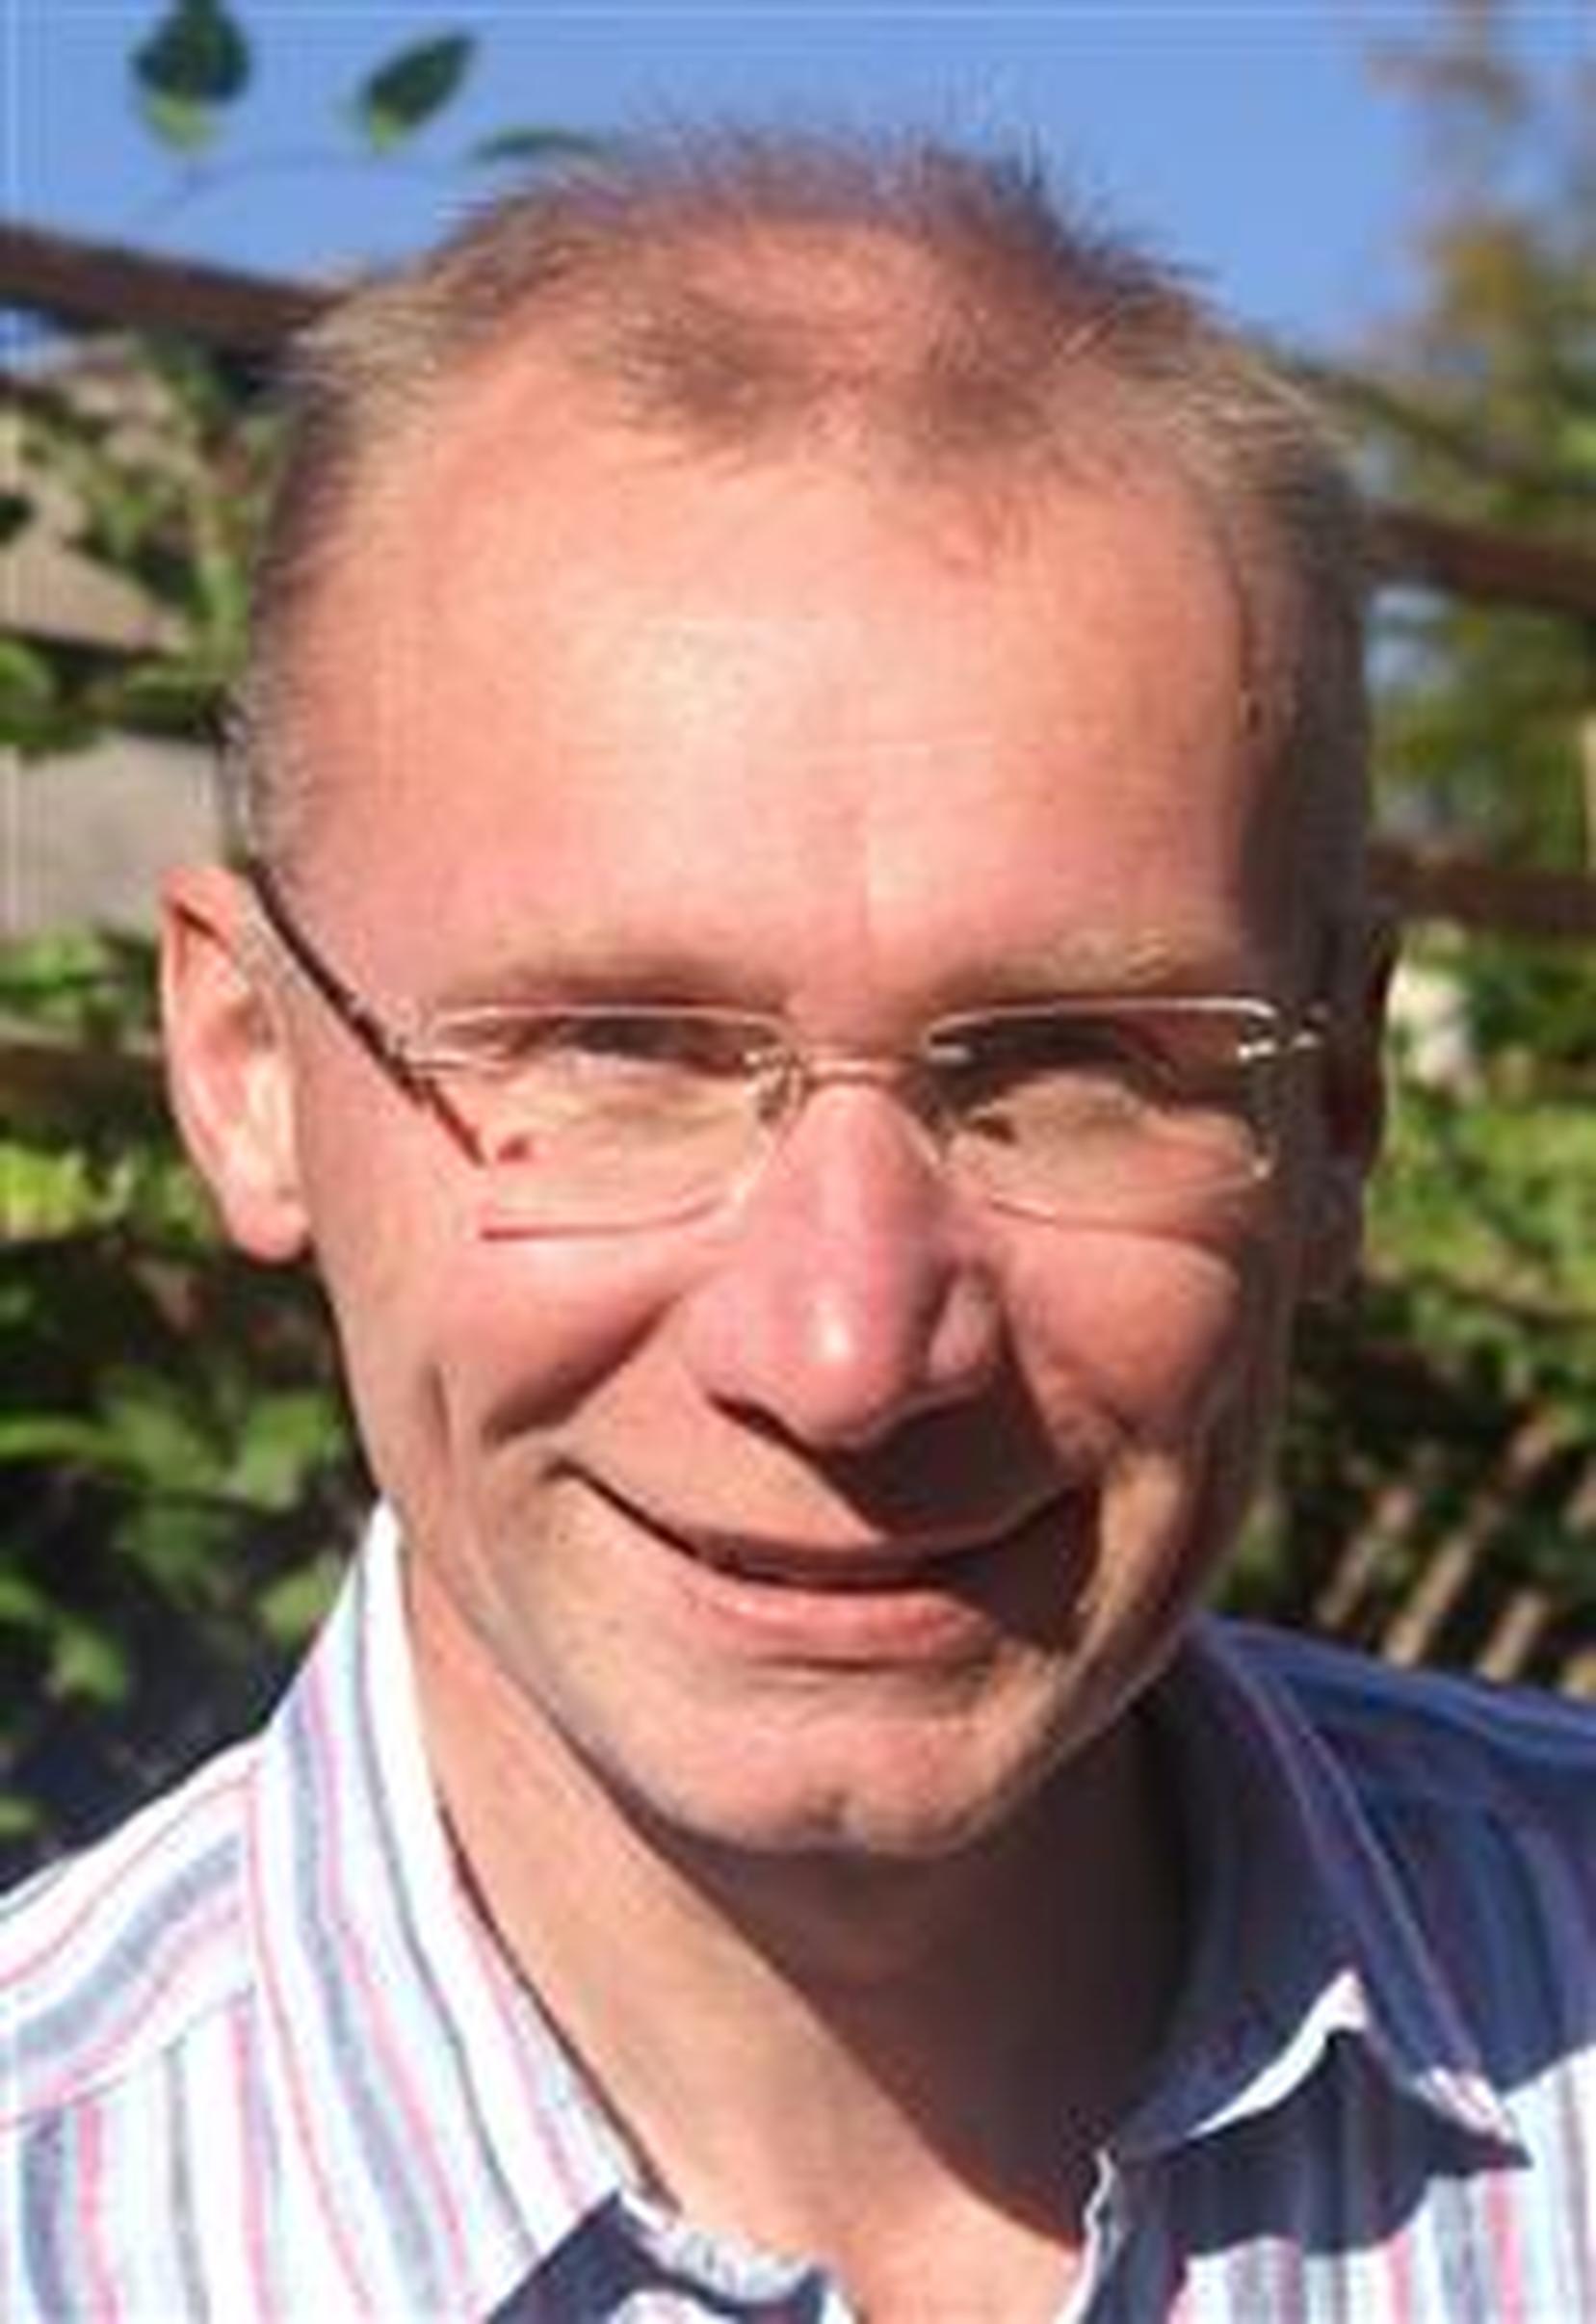 John Parkin
Professor of Transport Engineering, University of the West of England